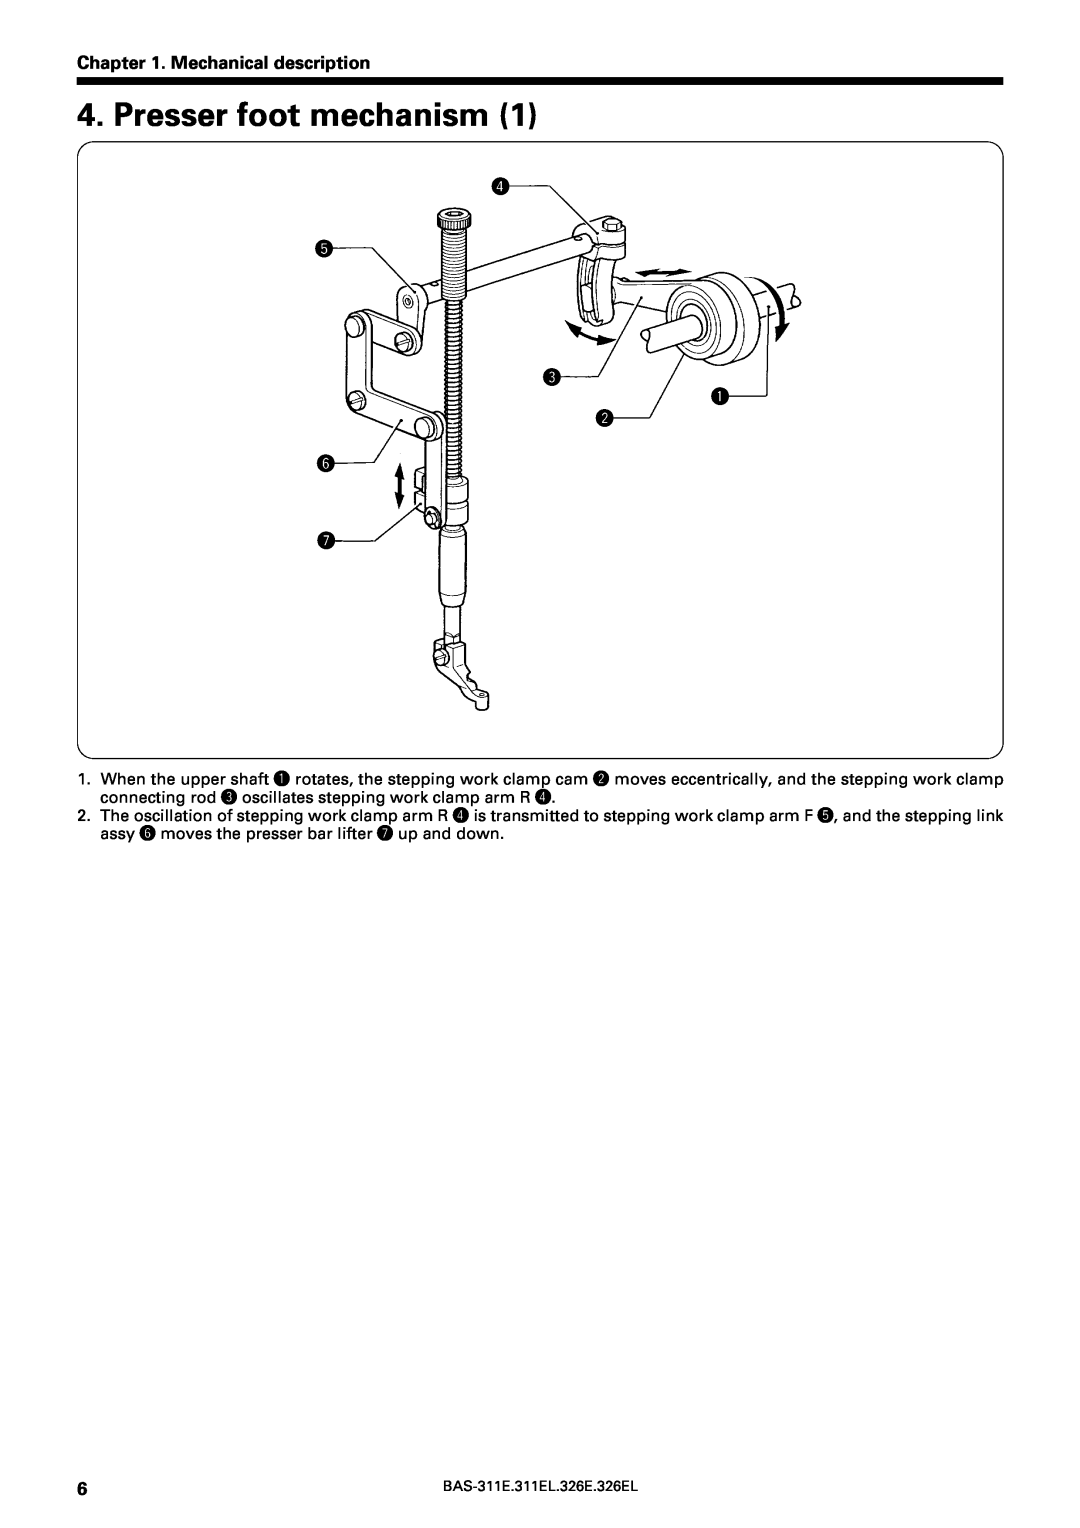 Brother BAS-311E service manual Presser foot mechanism, Mechanical description, r t e q w y u 